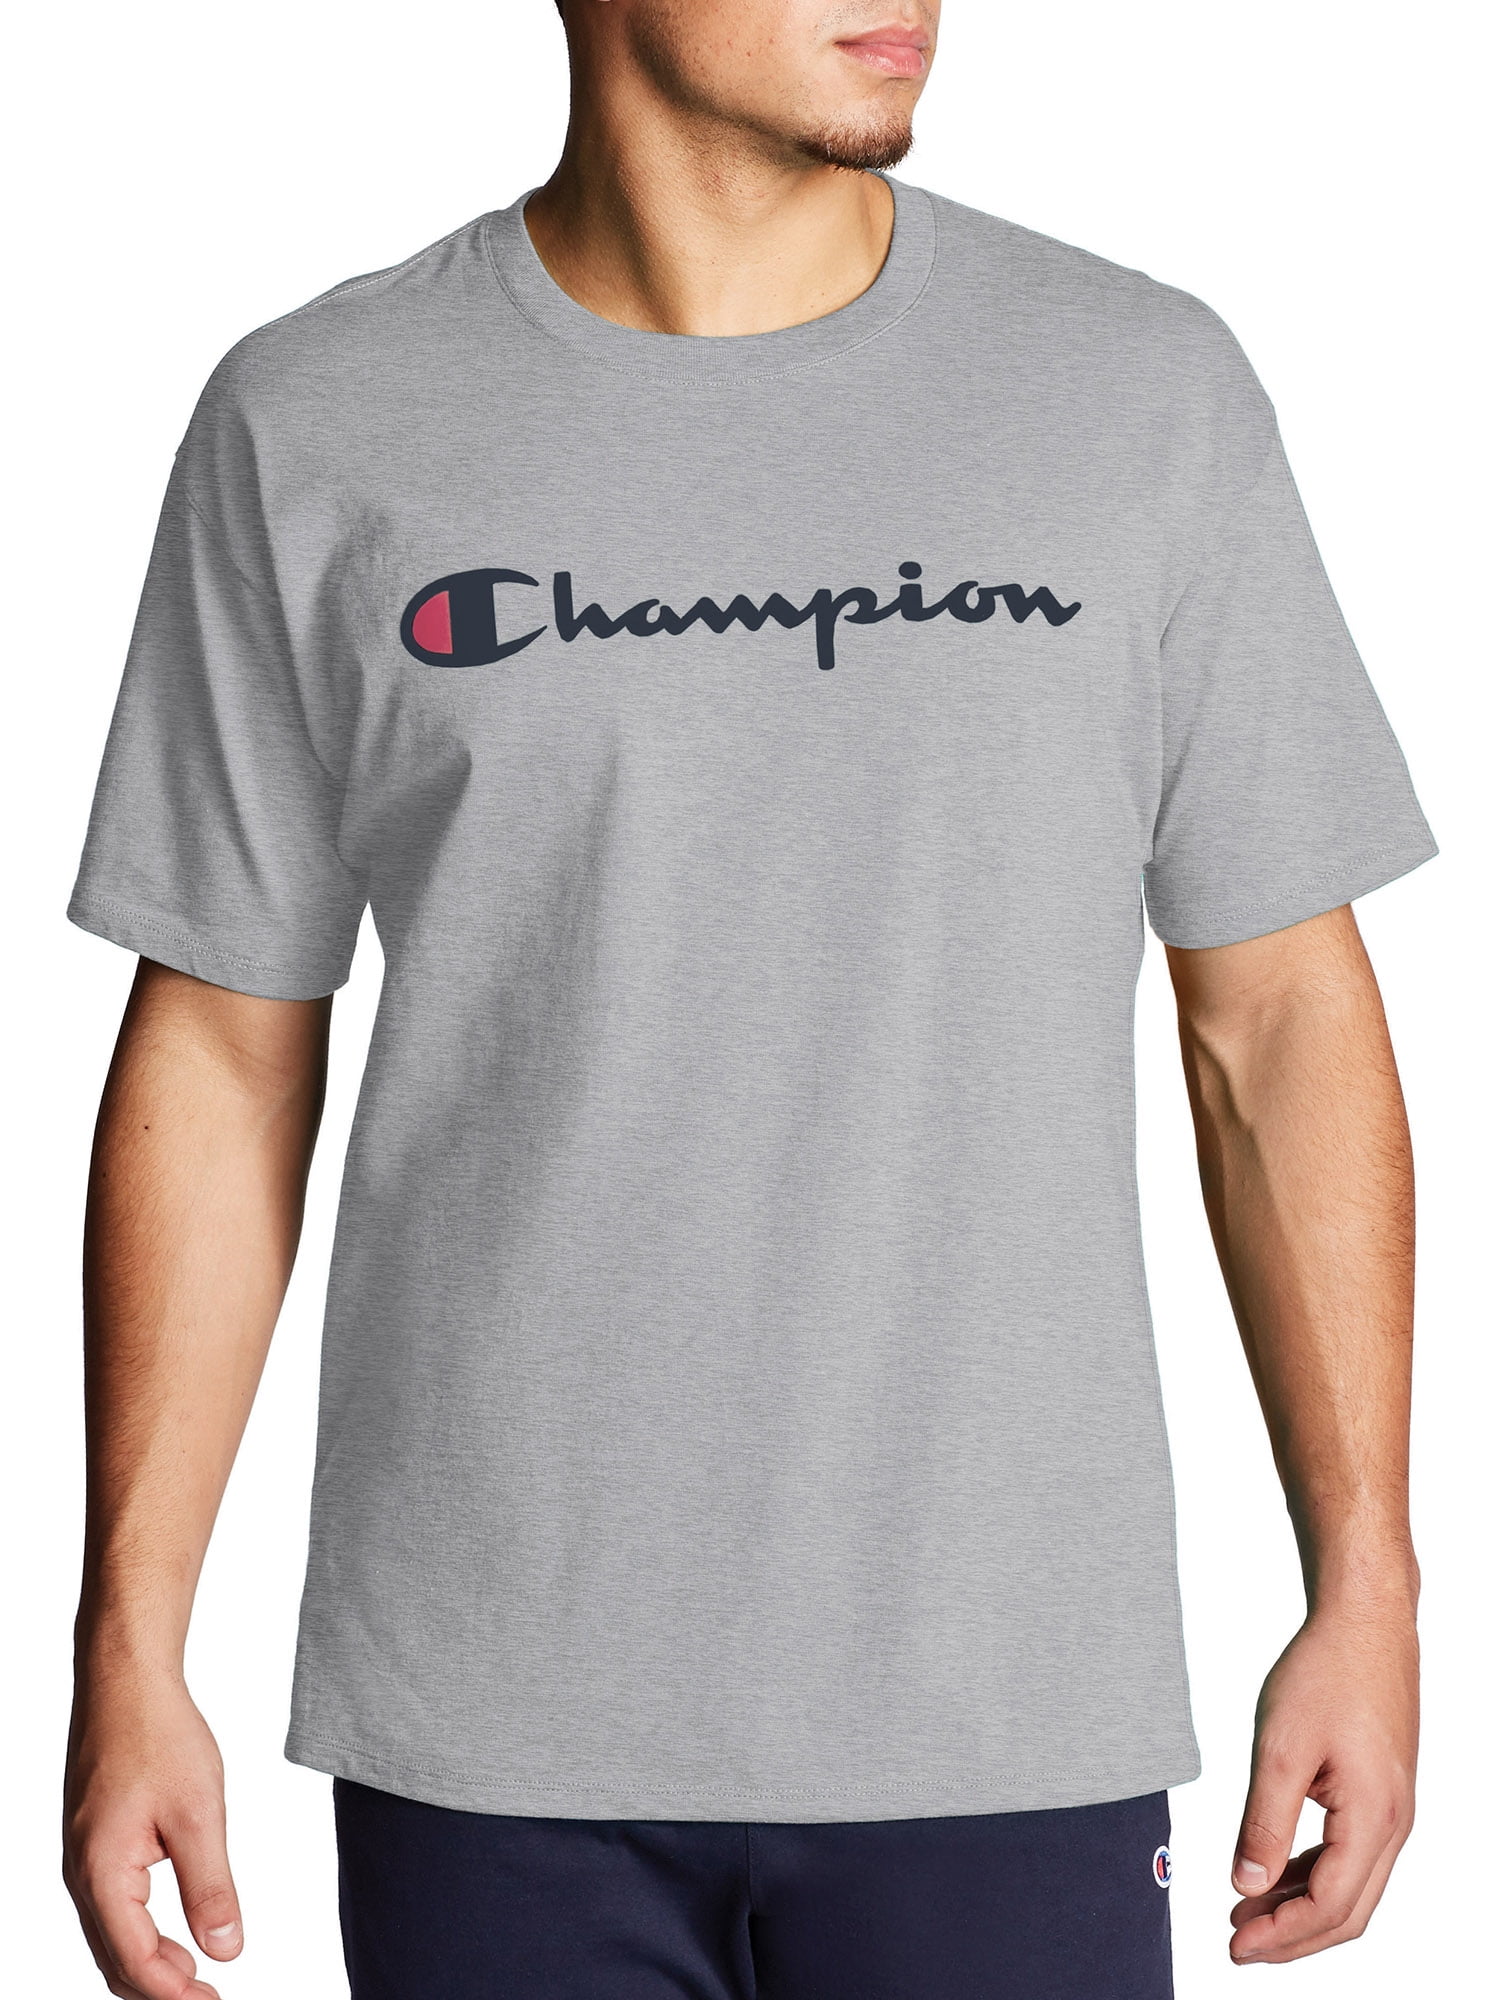 walmart champion shirt